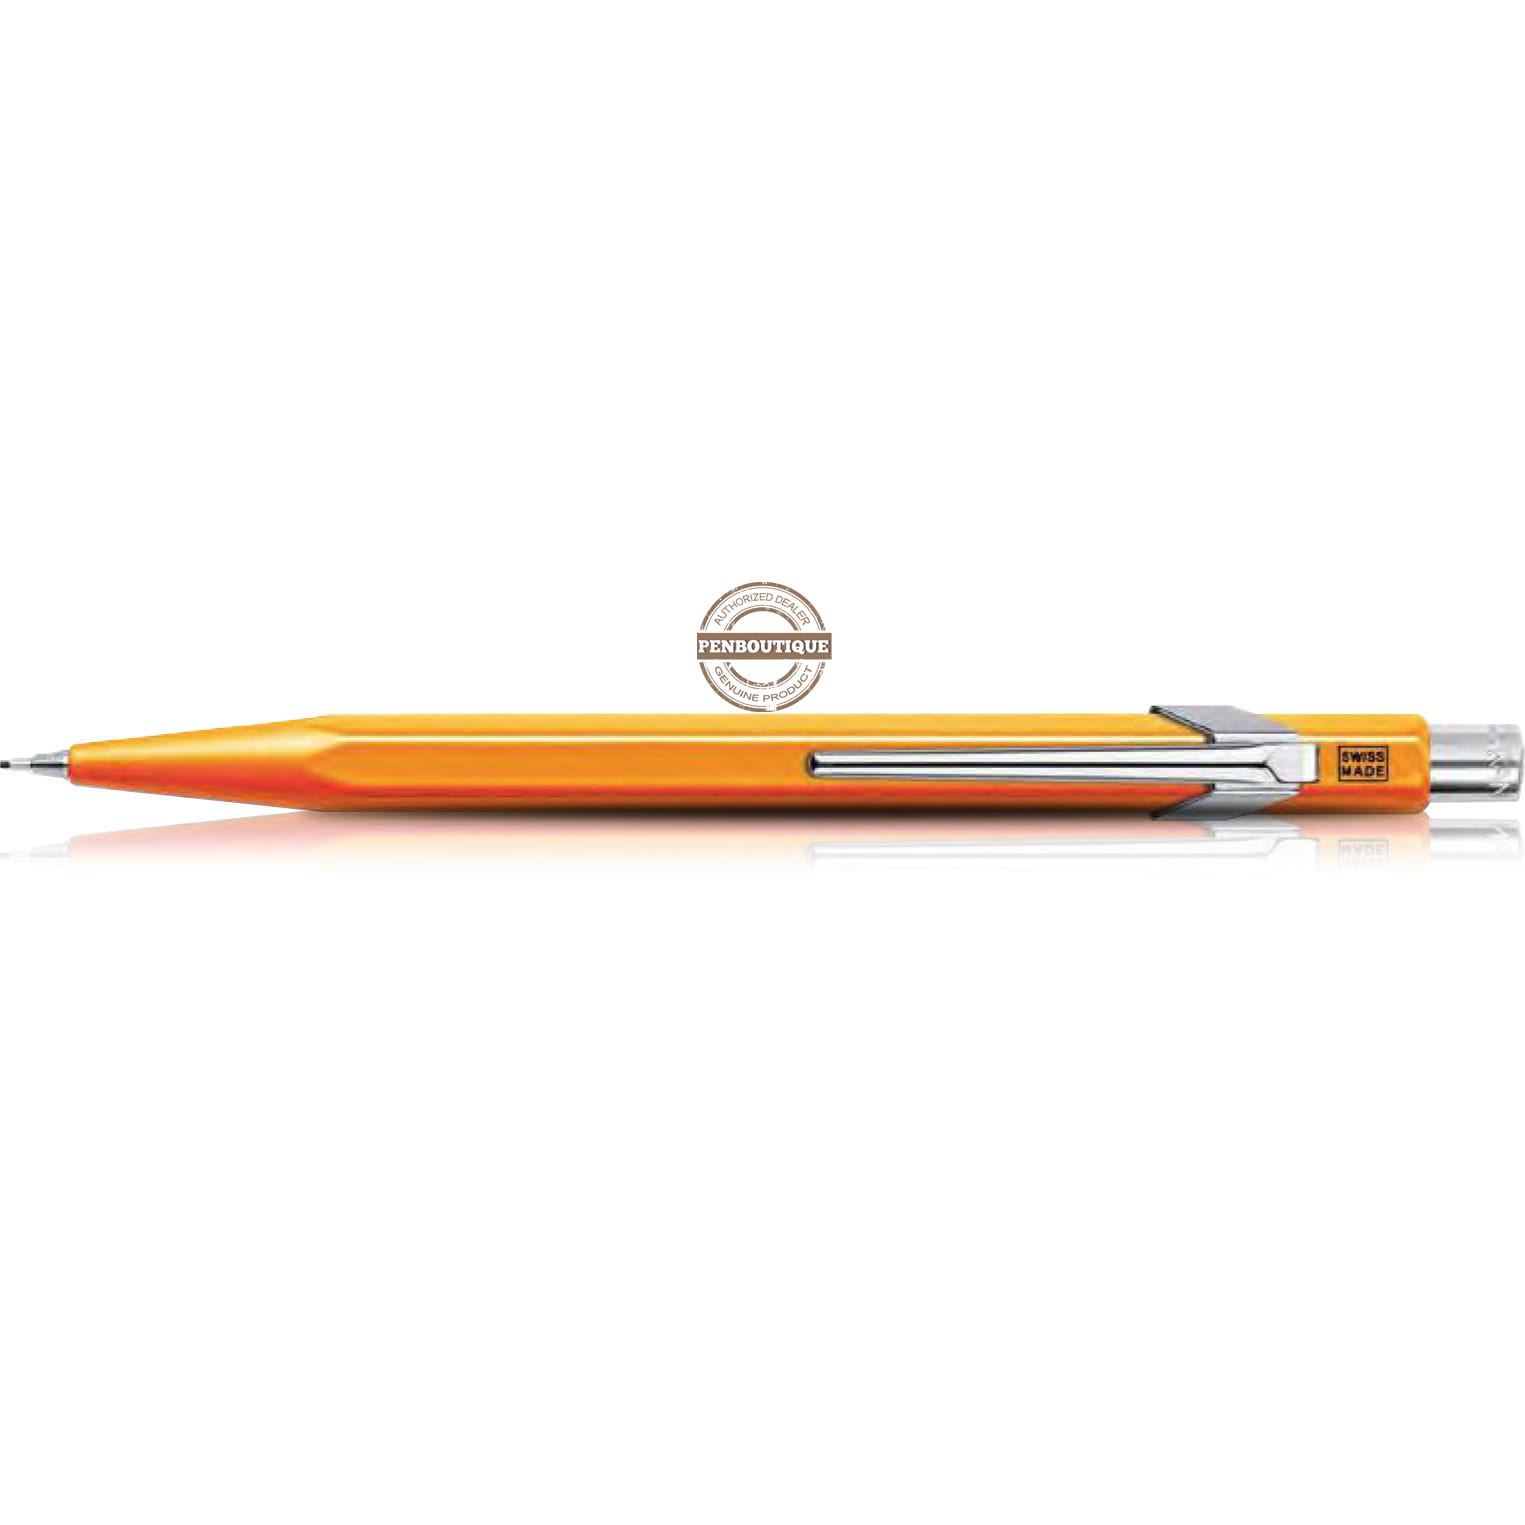 Caran d'Ache 844 Classic Mechanical Pencil